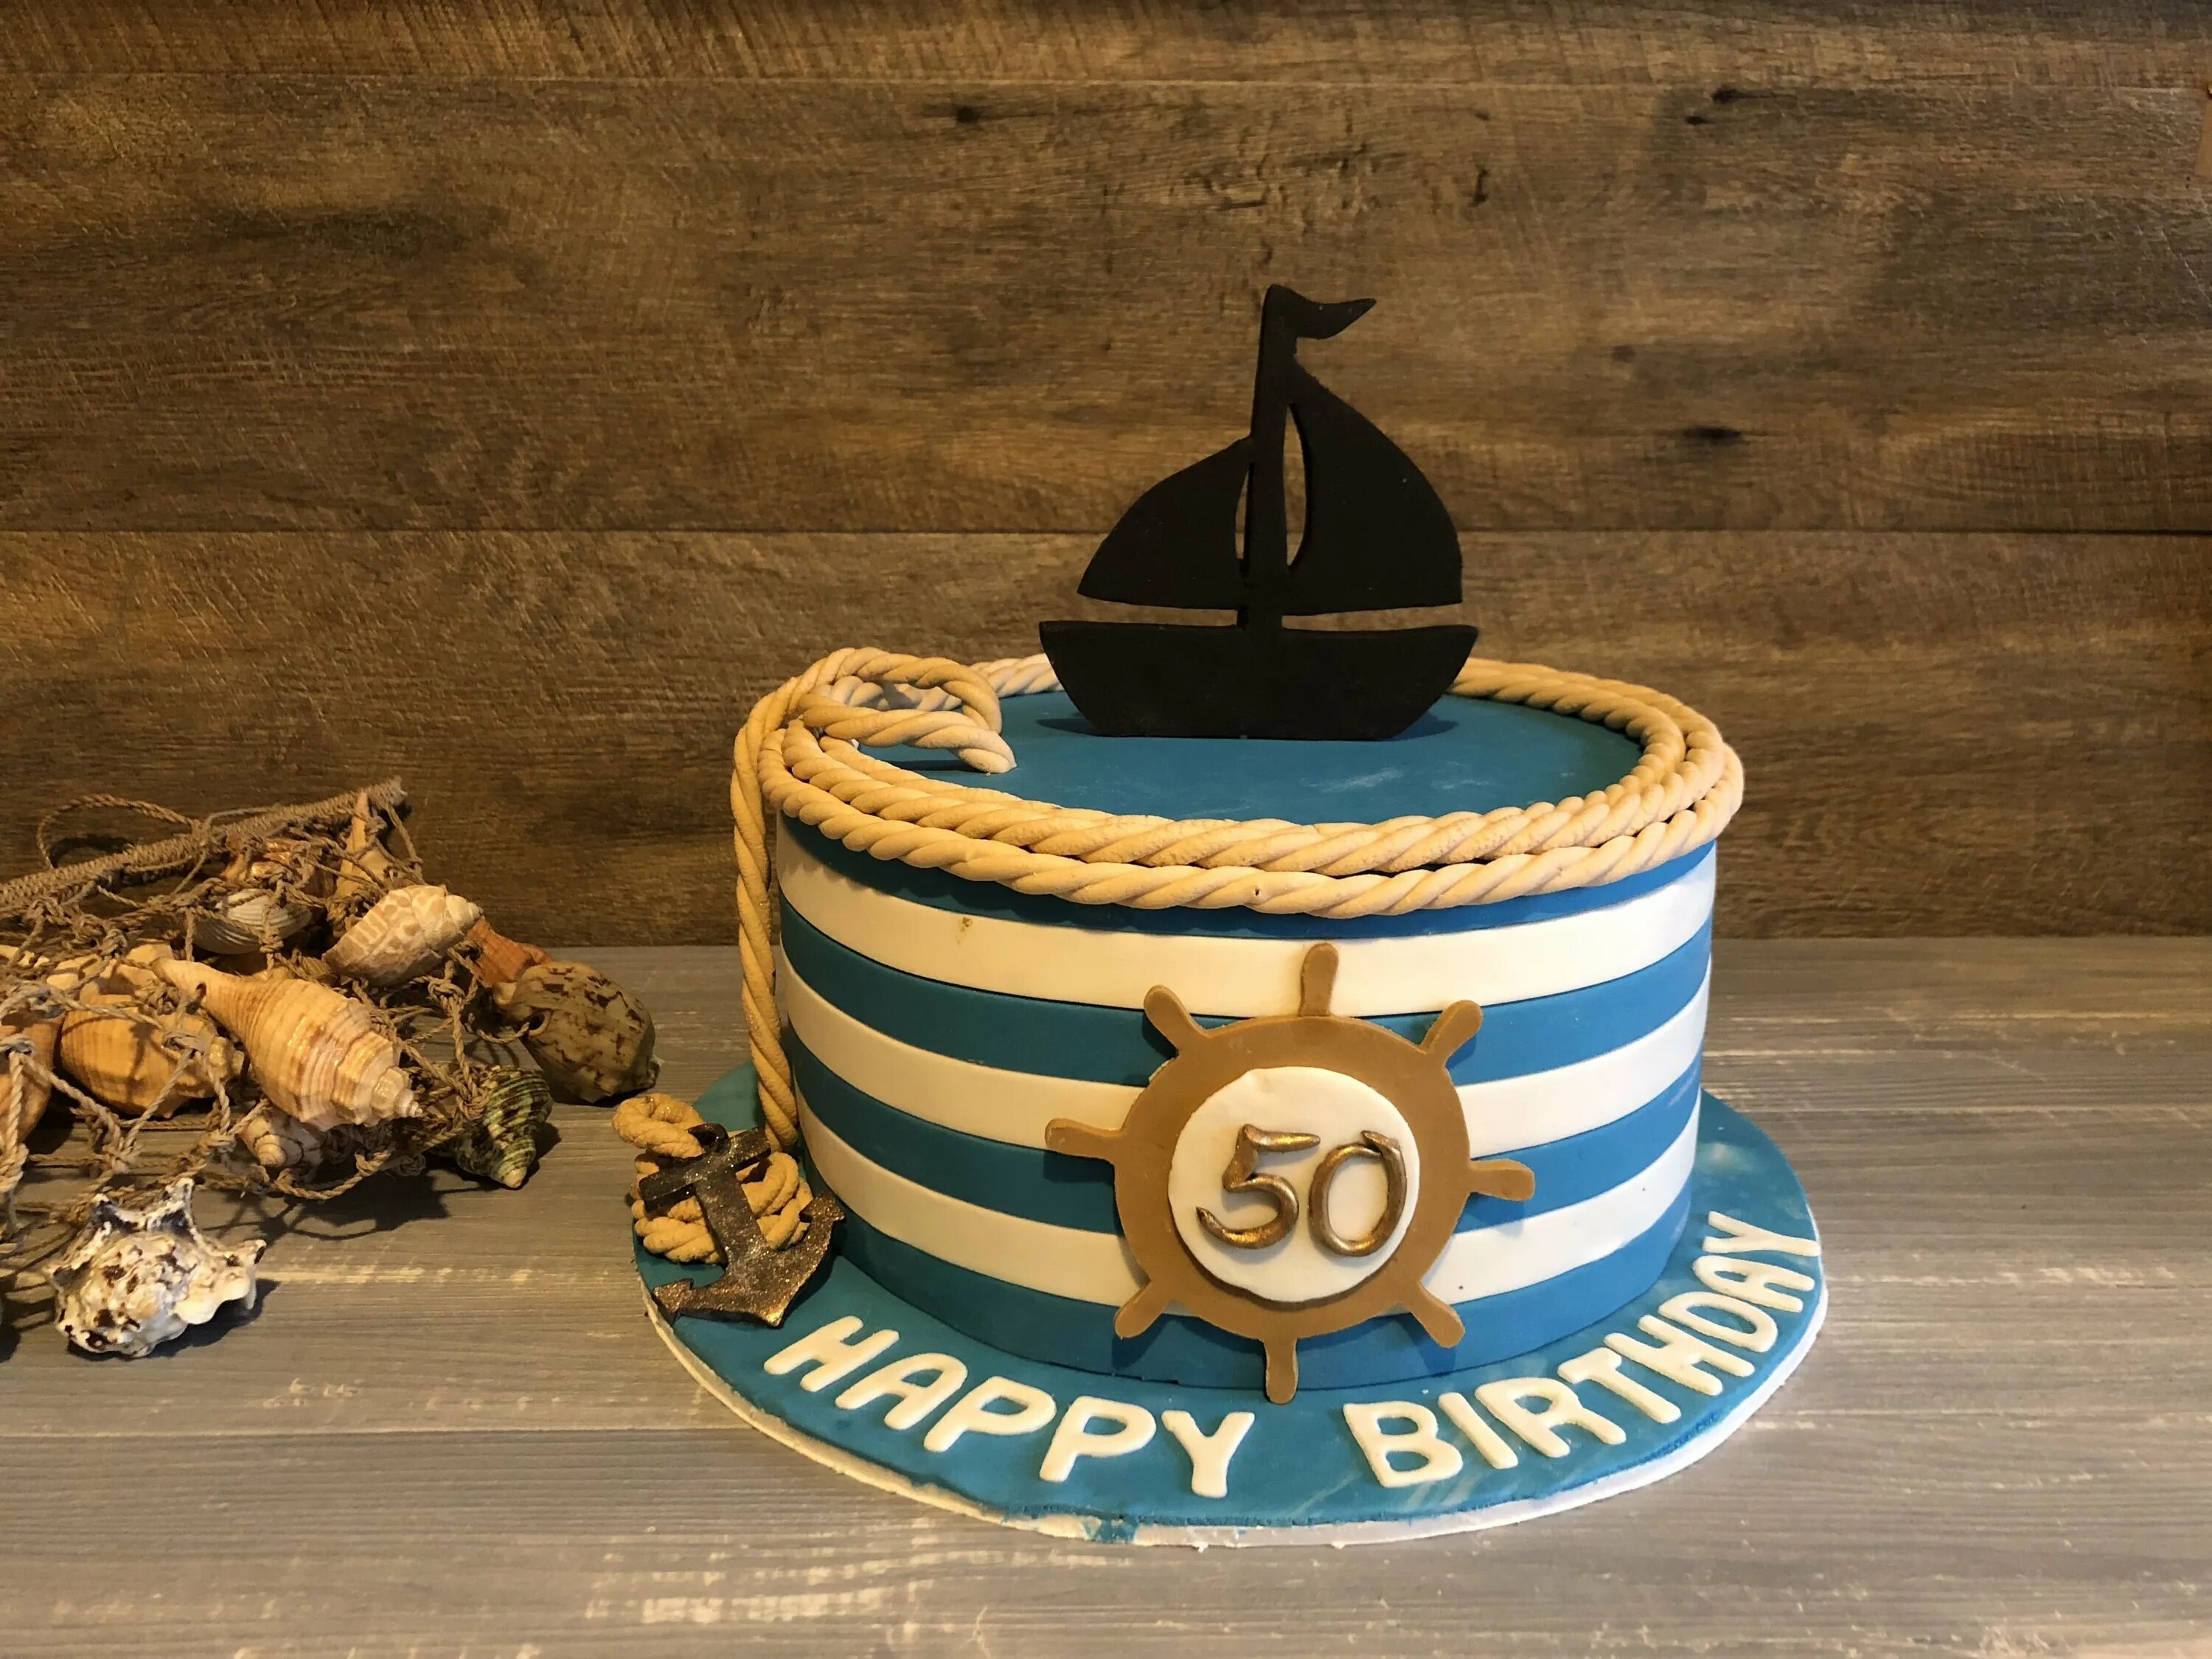 Морской день рождения мужчине. Торт морская тематика. Торт в морском стиле. Торт для моряка. Торт с морской тематикой для мужчины.